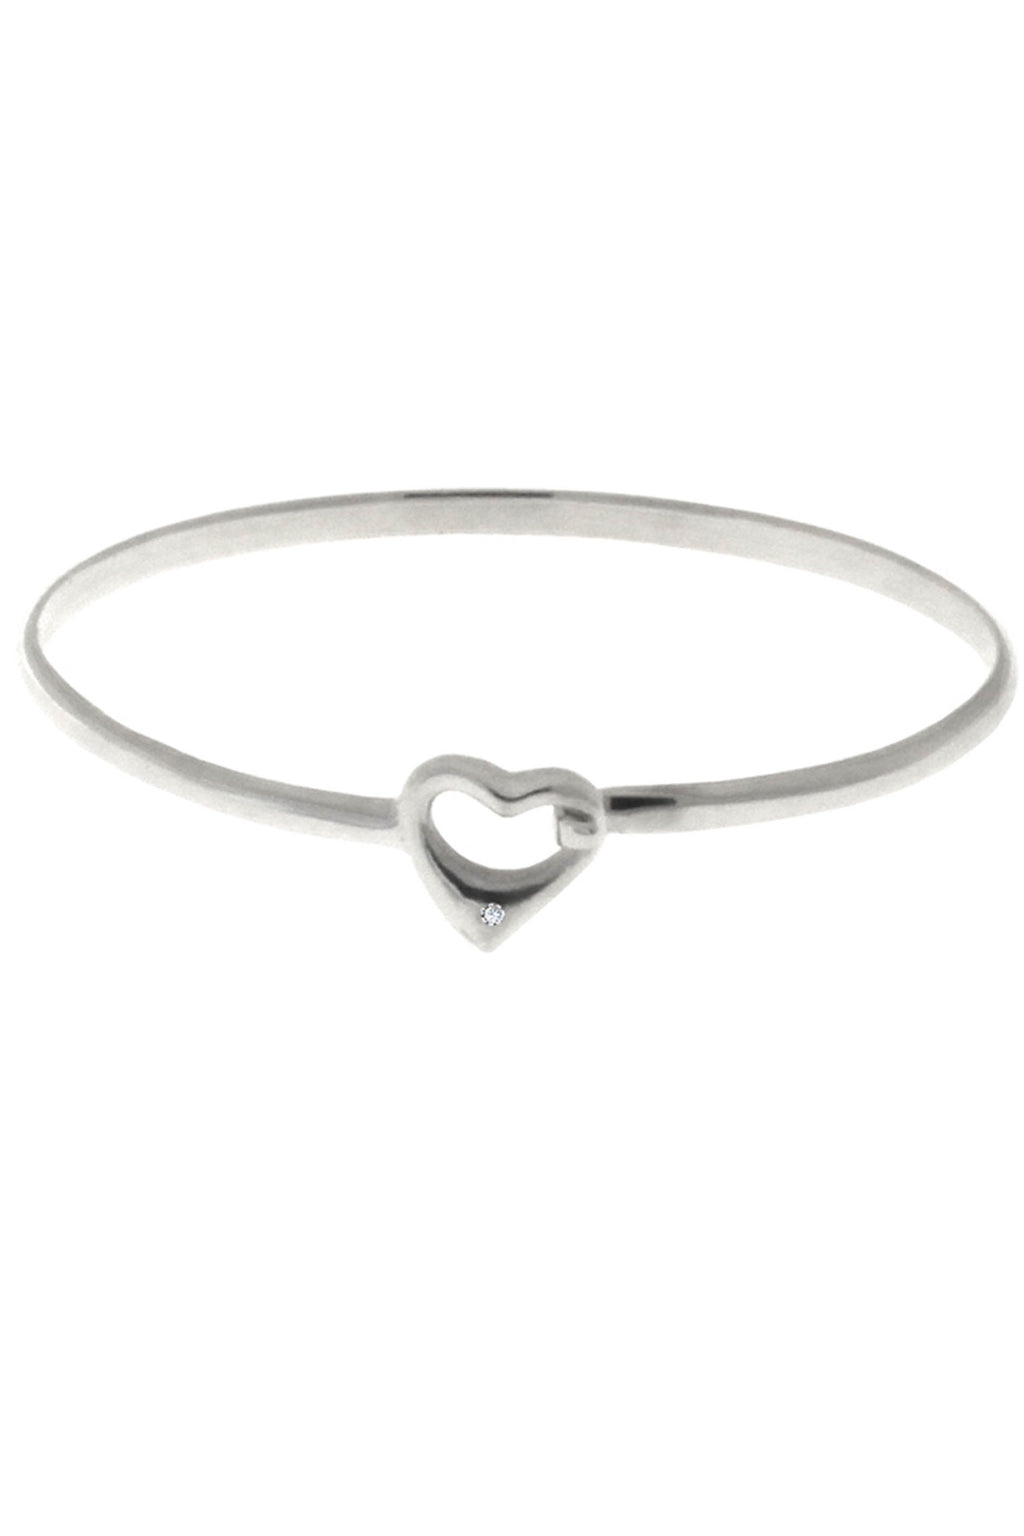 Diamond Heart Silver bangle / Nina B Jewellery